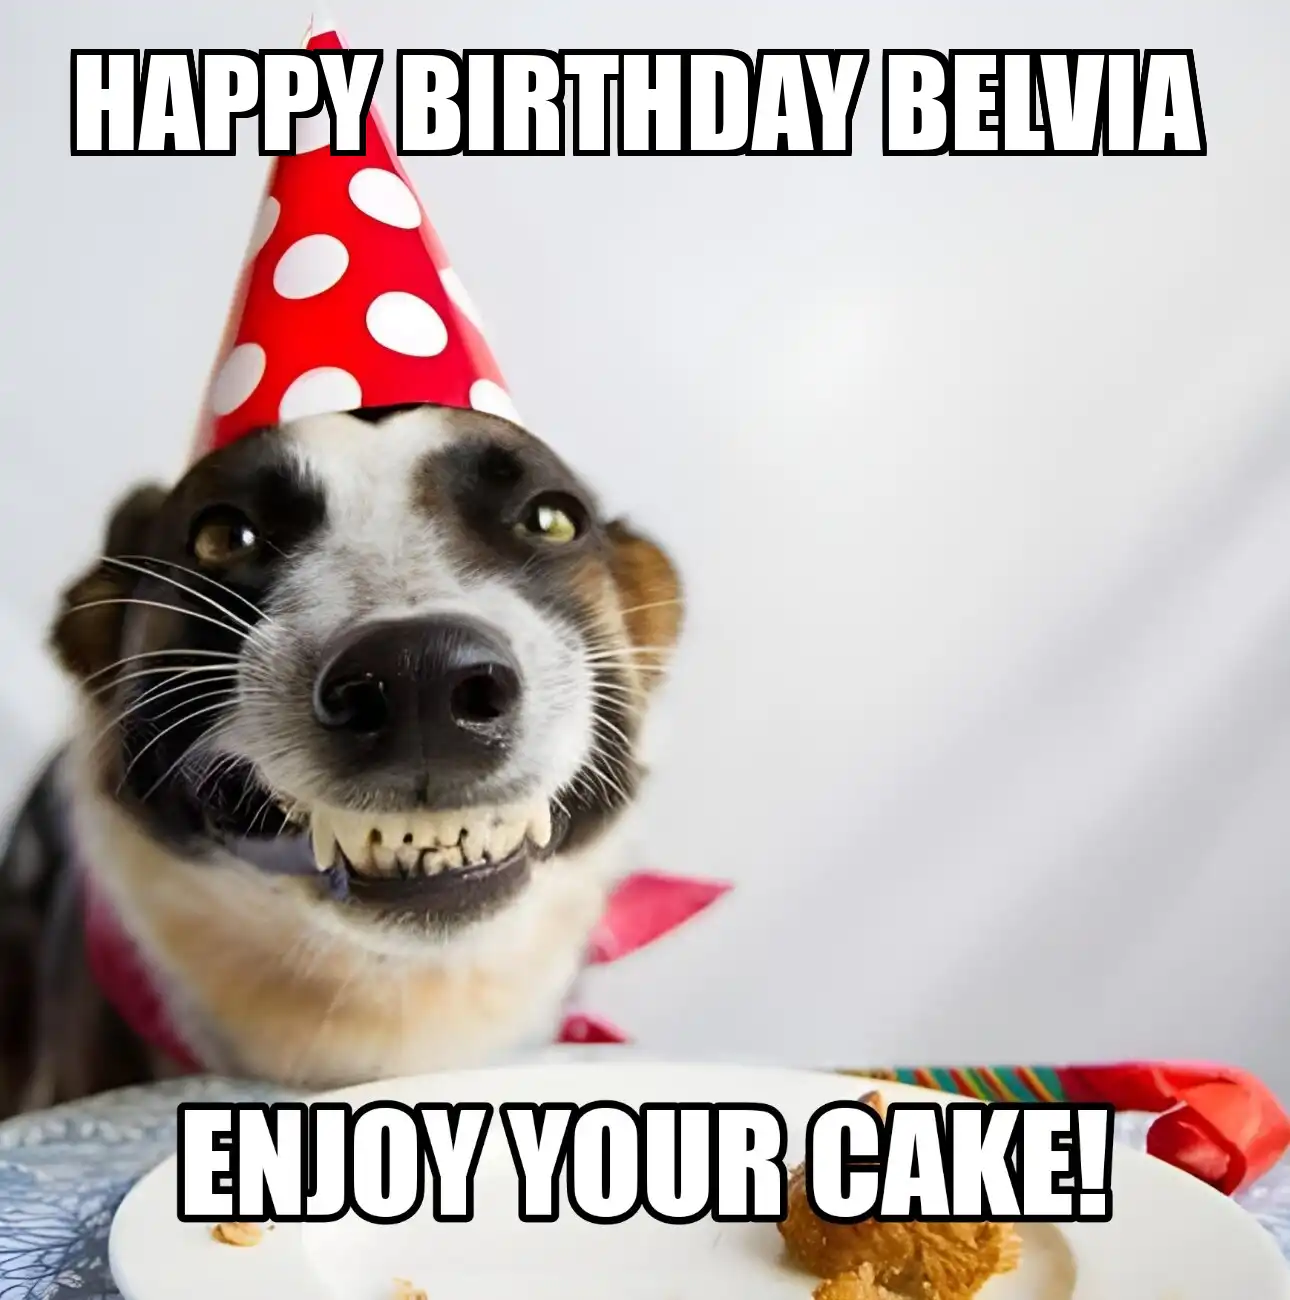 Happy Birthday Belvia Enjoy Your Cake Dog Meme